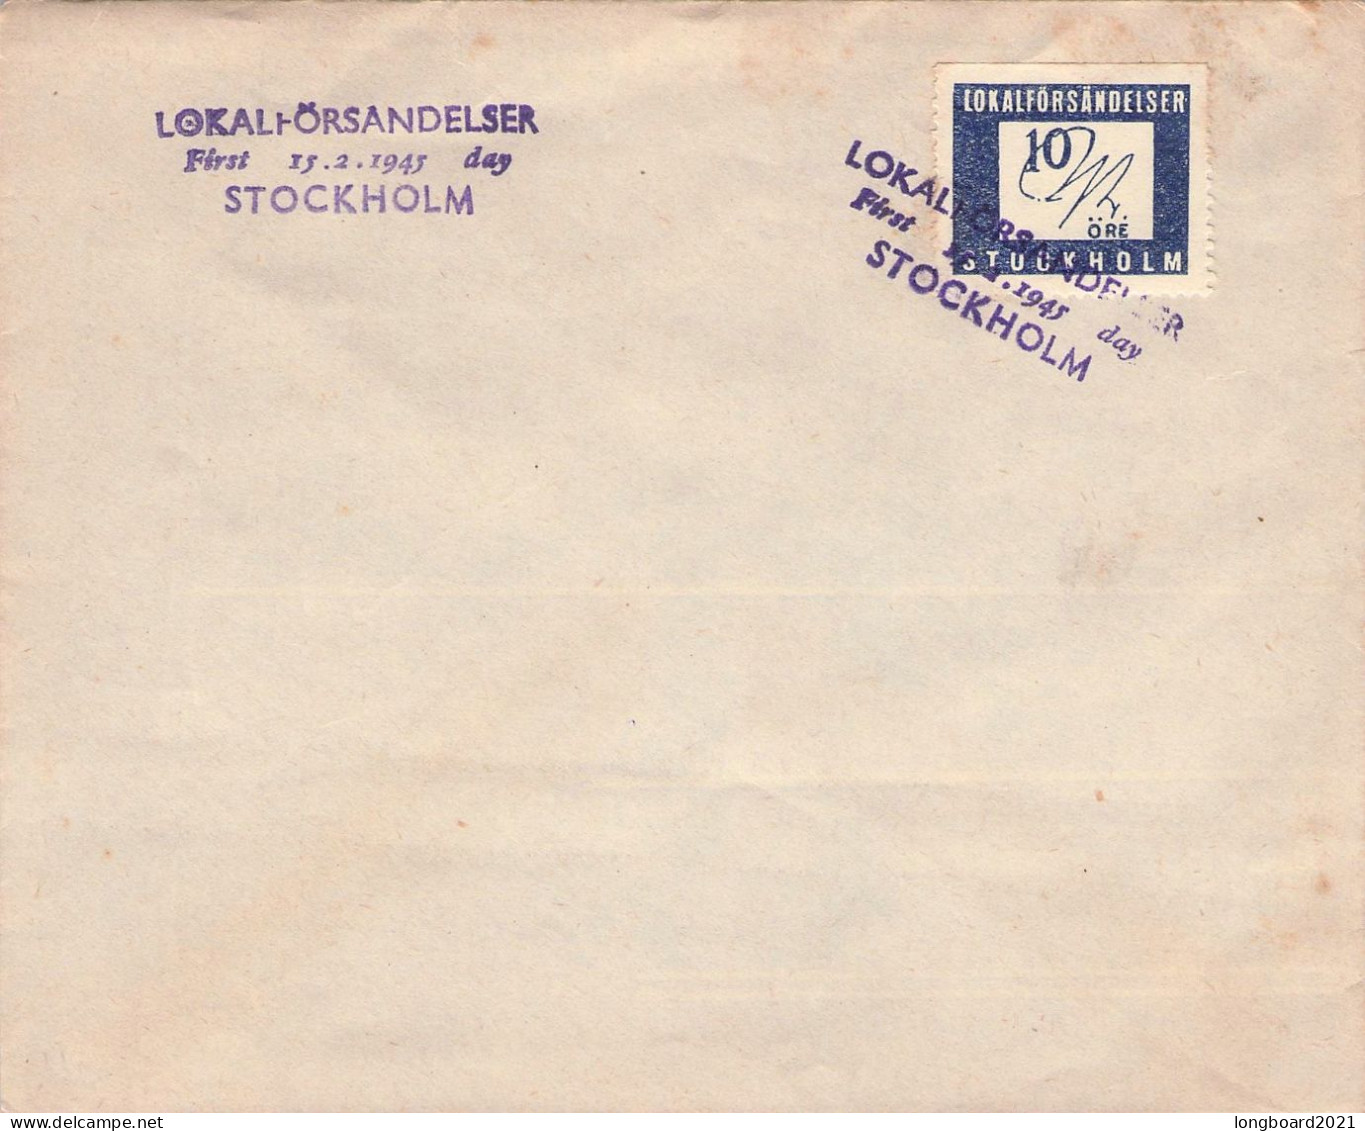 SWEDEN - LOKAL POSTEN - FDC 15.2.1945 STOOKHOLM / *329 - Local Post Stamps